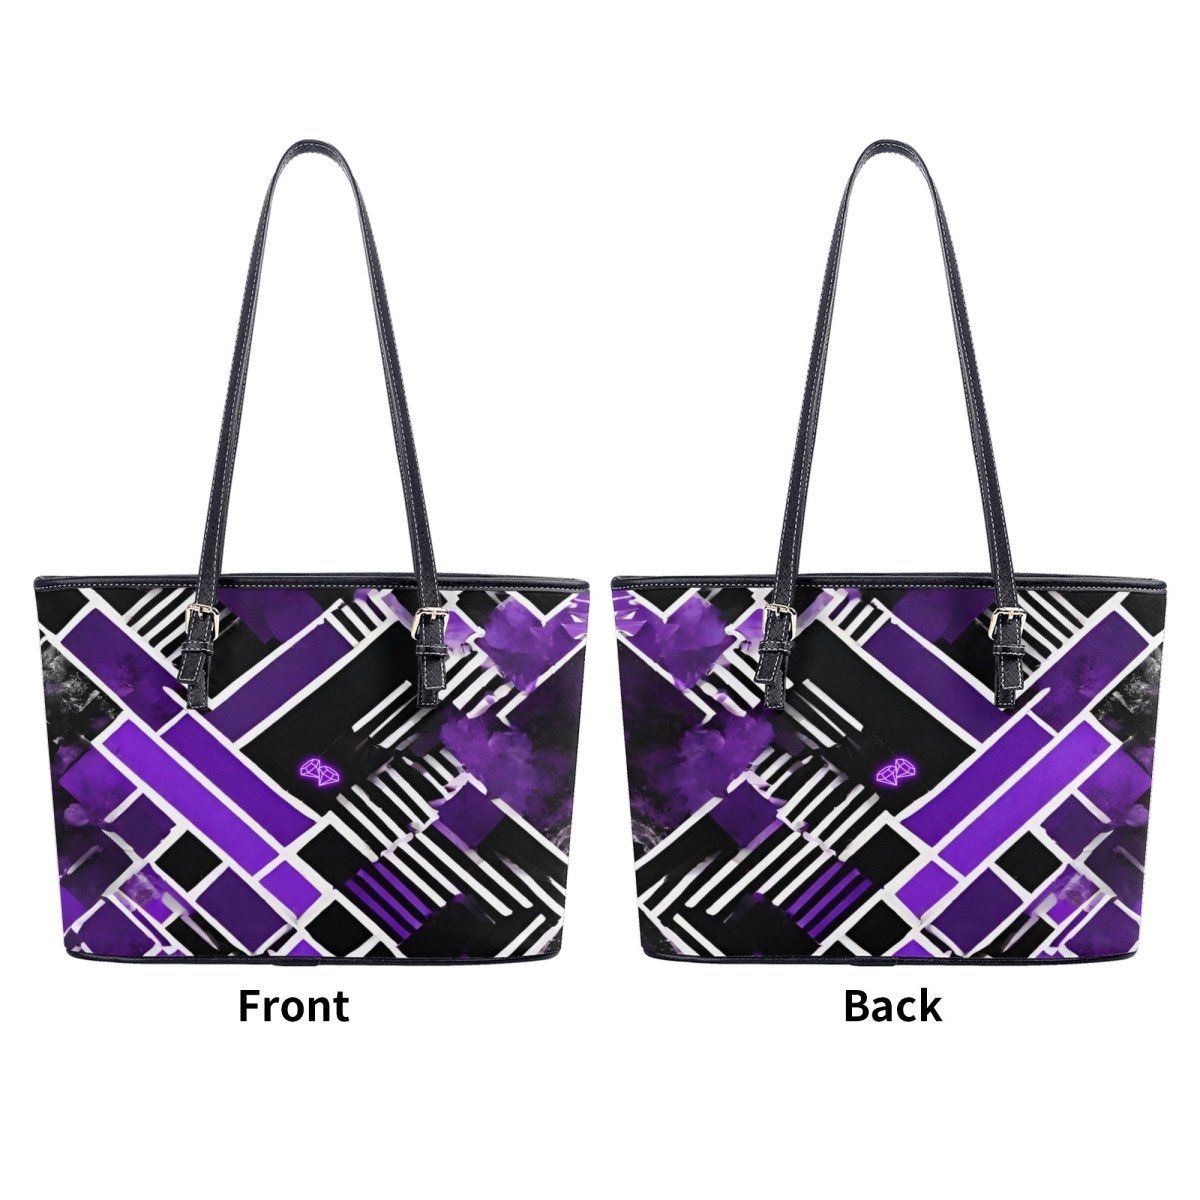 Purple and Black Tote Bag - Iron Phoenix GHG